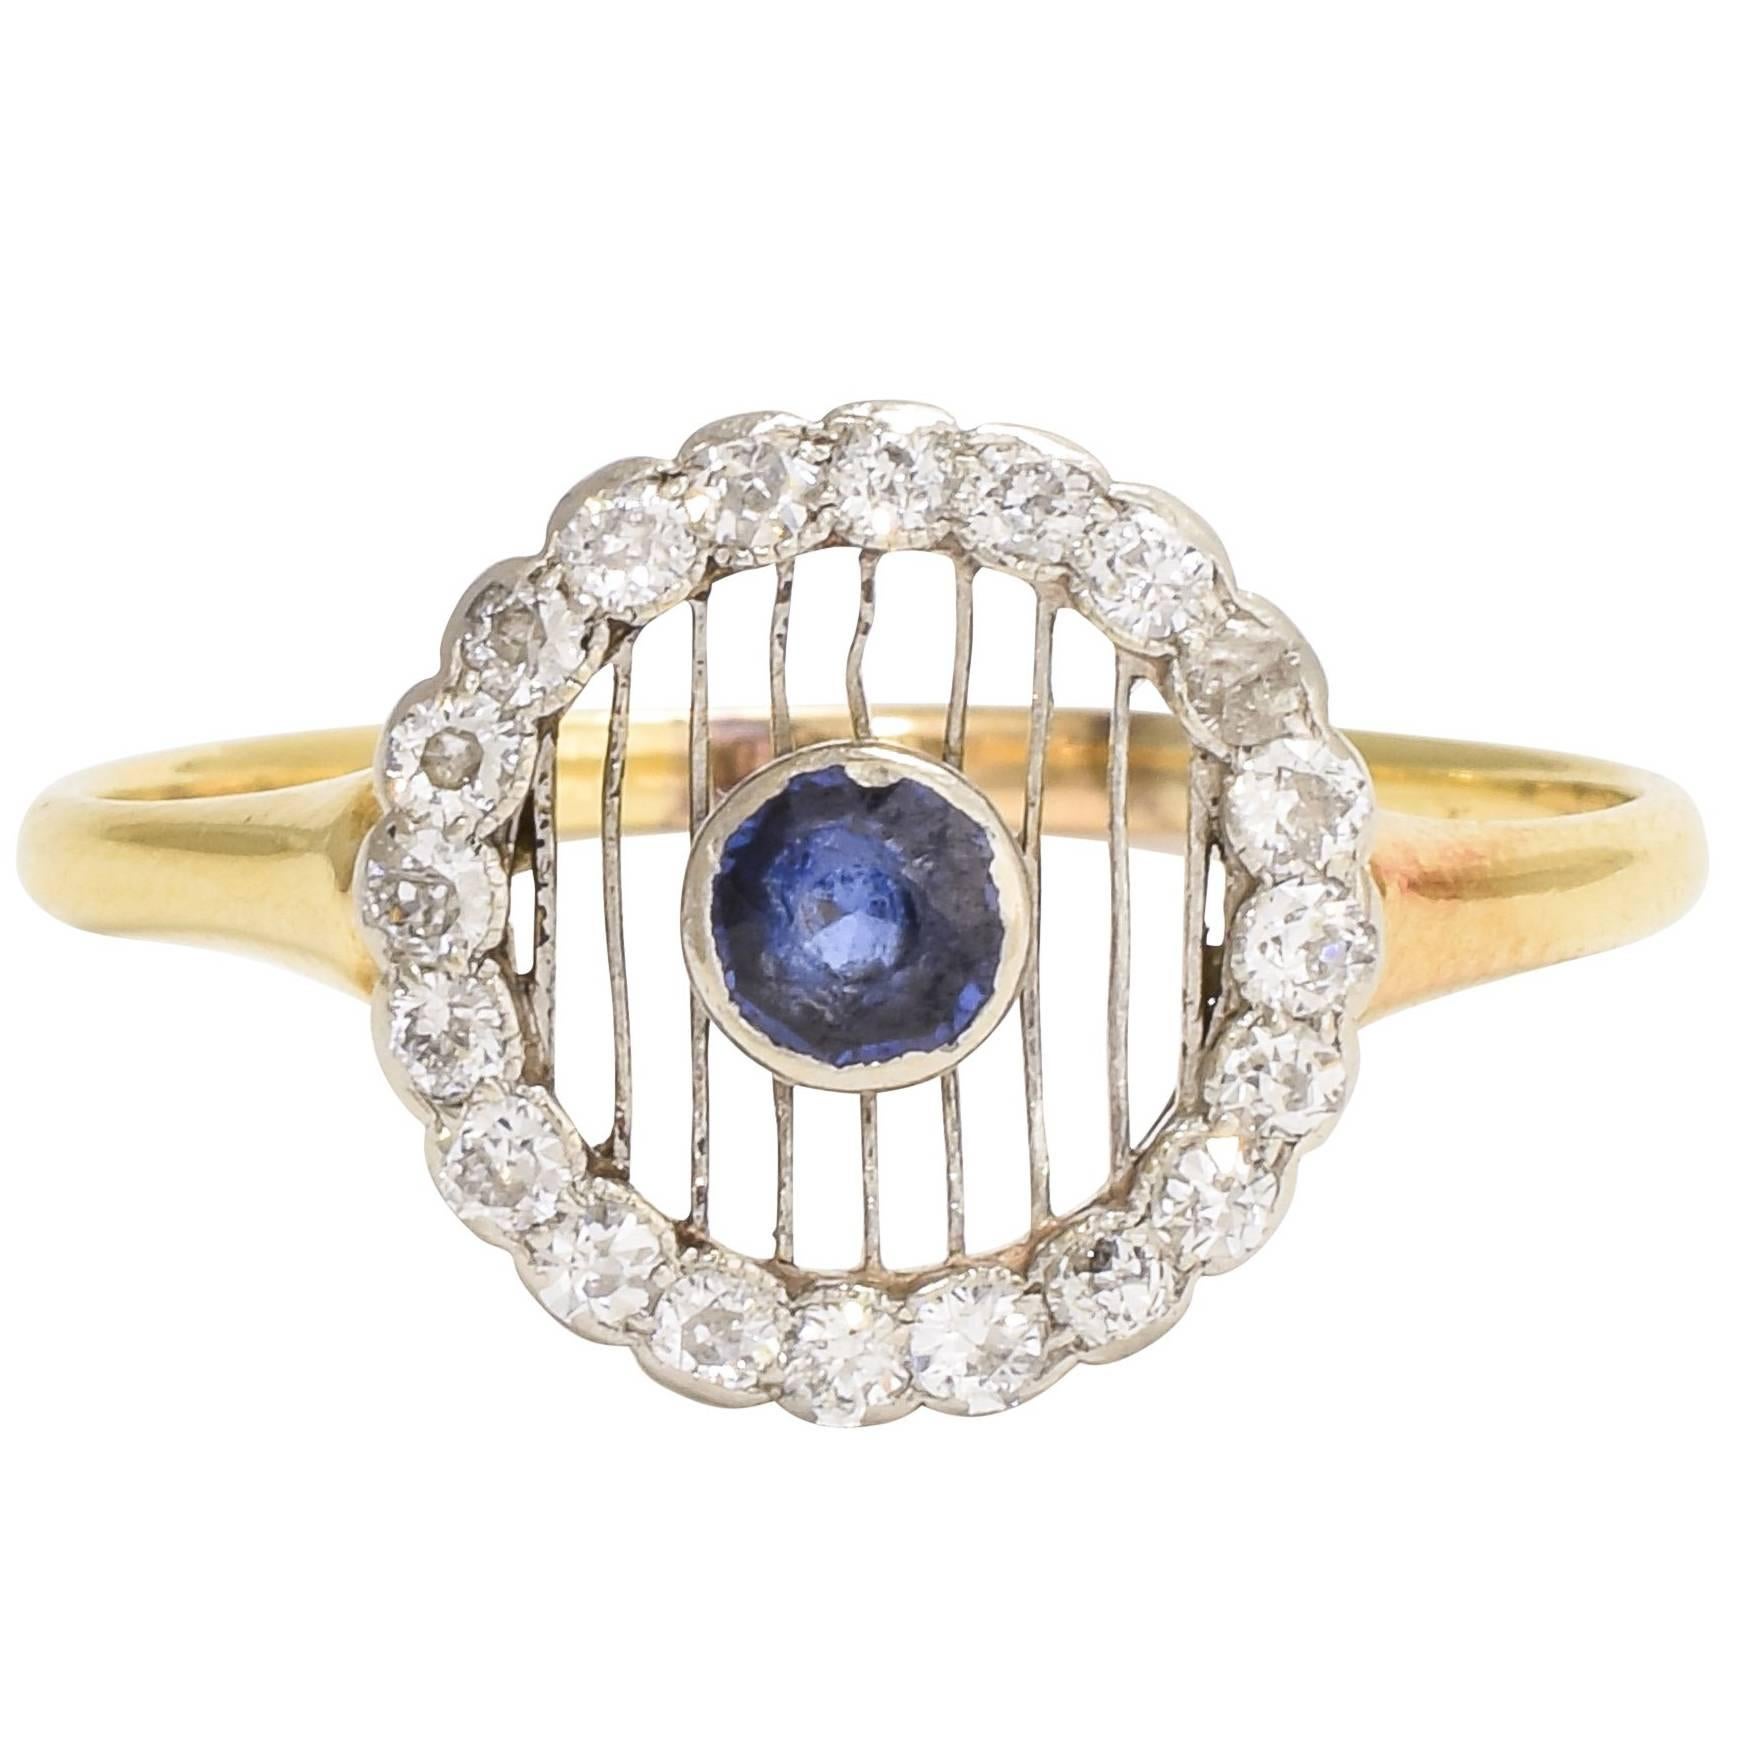 Antique Edwardian Sapphire Diamond Halo Cluster Ring